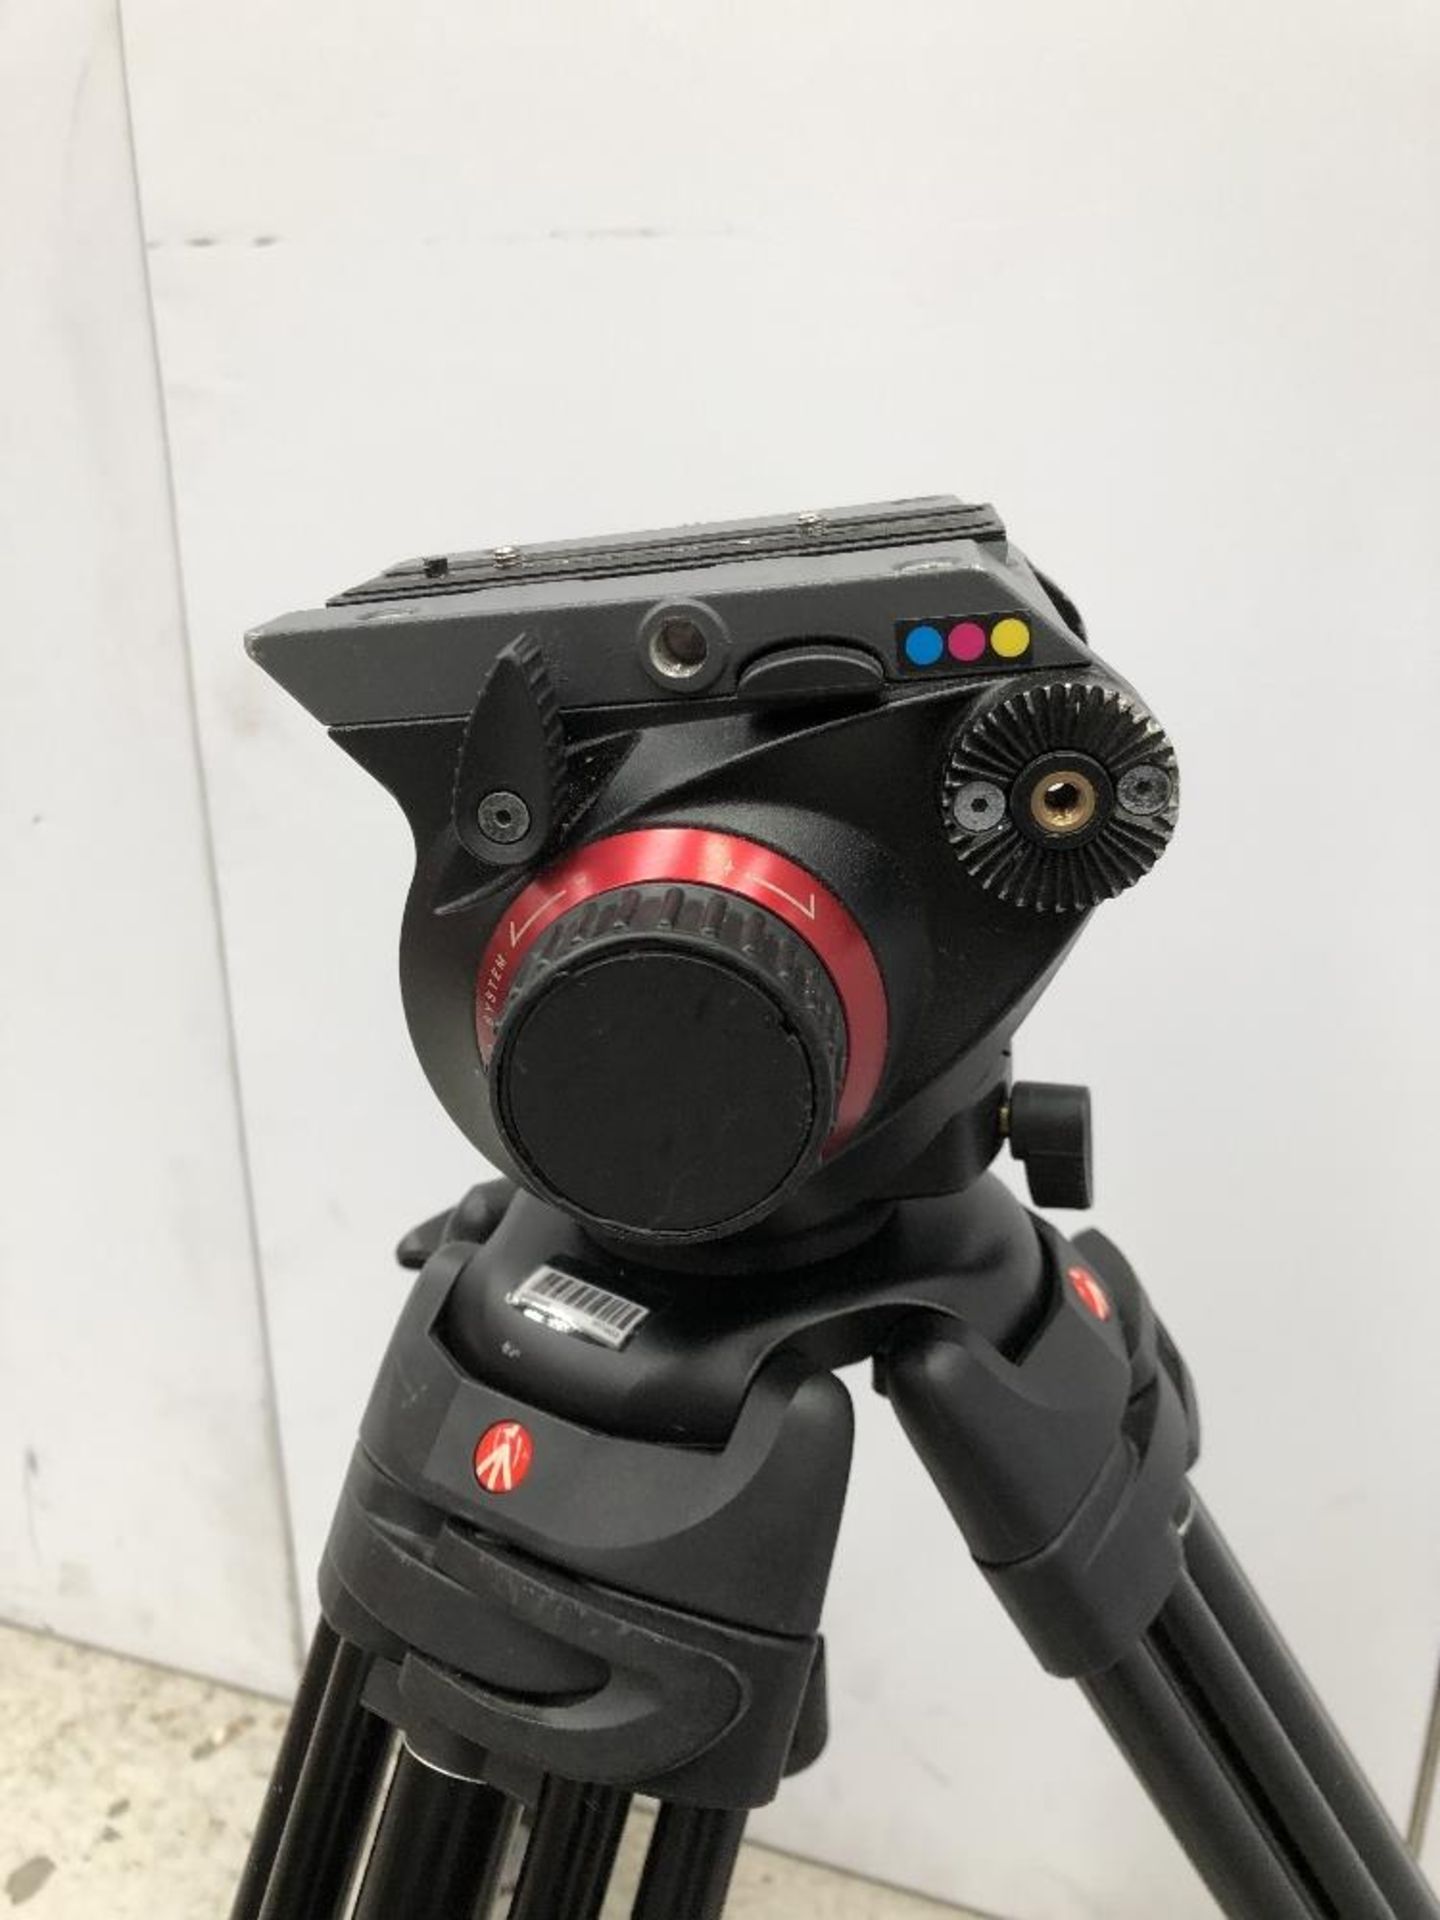 Manfrotto 546GB Aluminium Camera Tripod With Manfrotto 504HD Fluid Head - Image 2 of 6